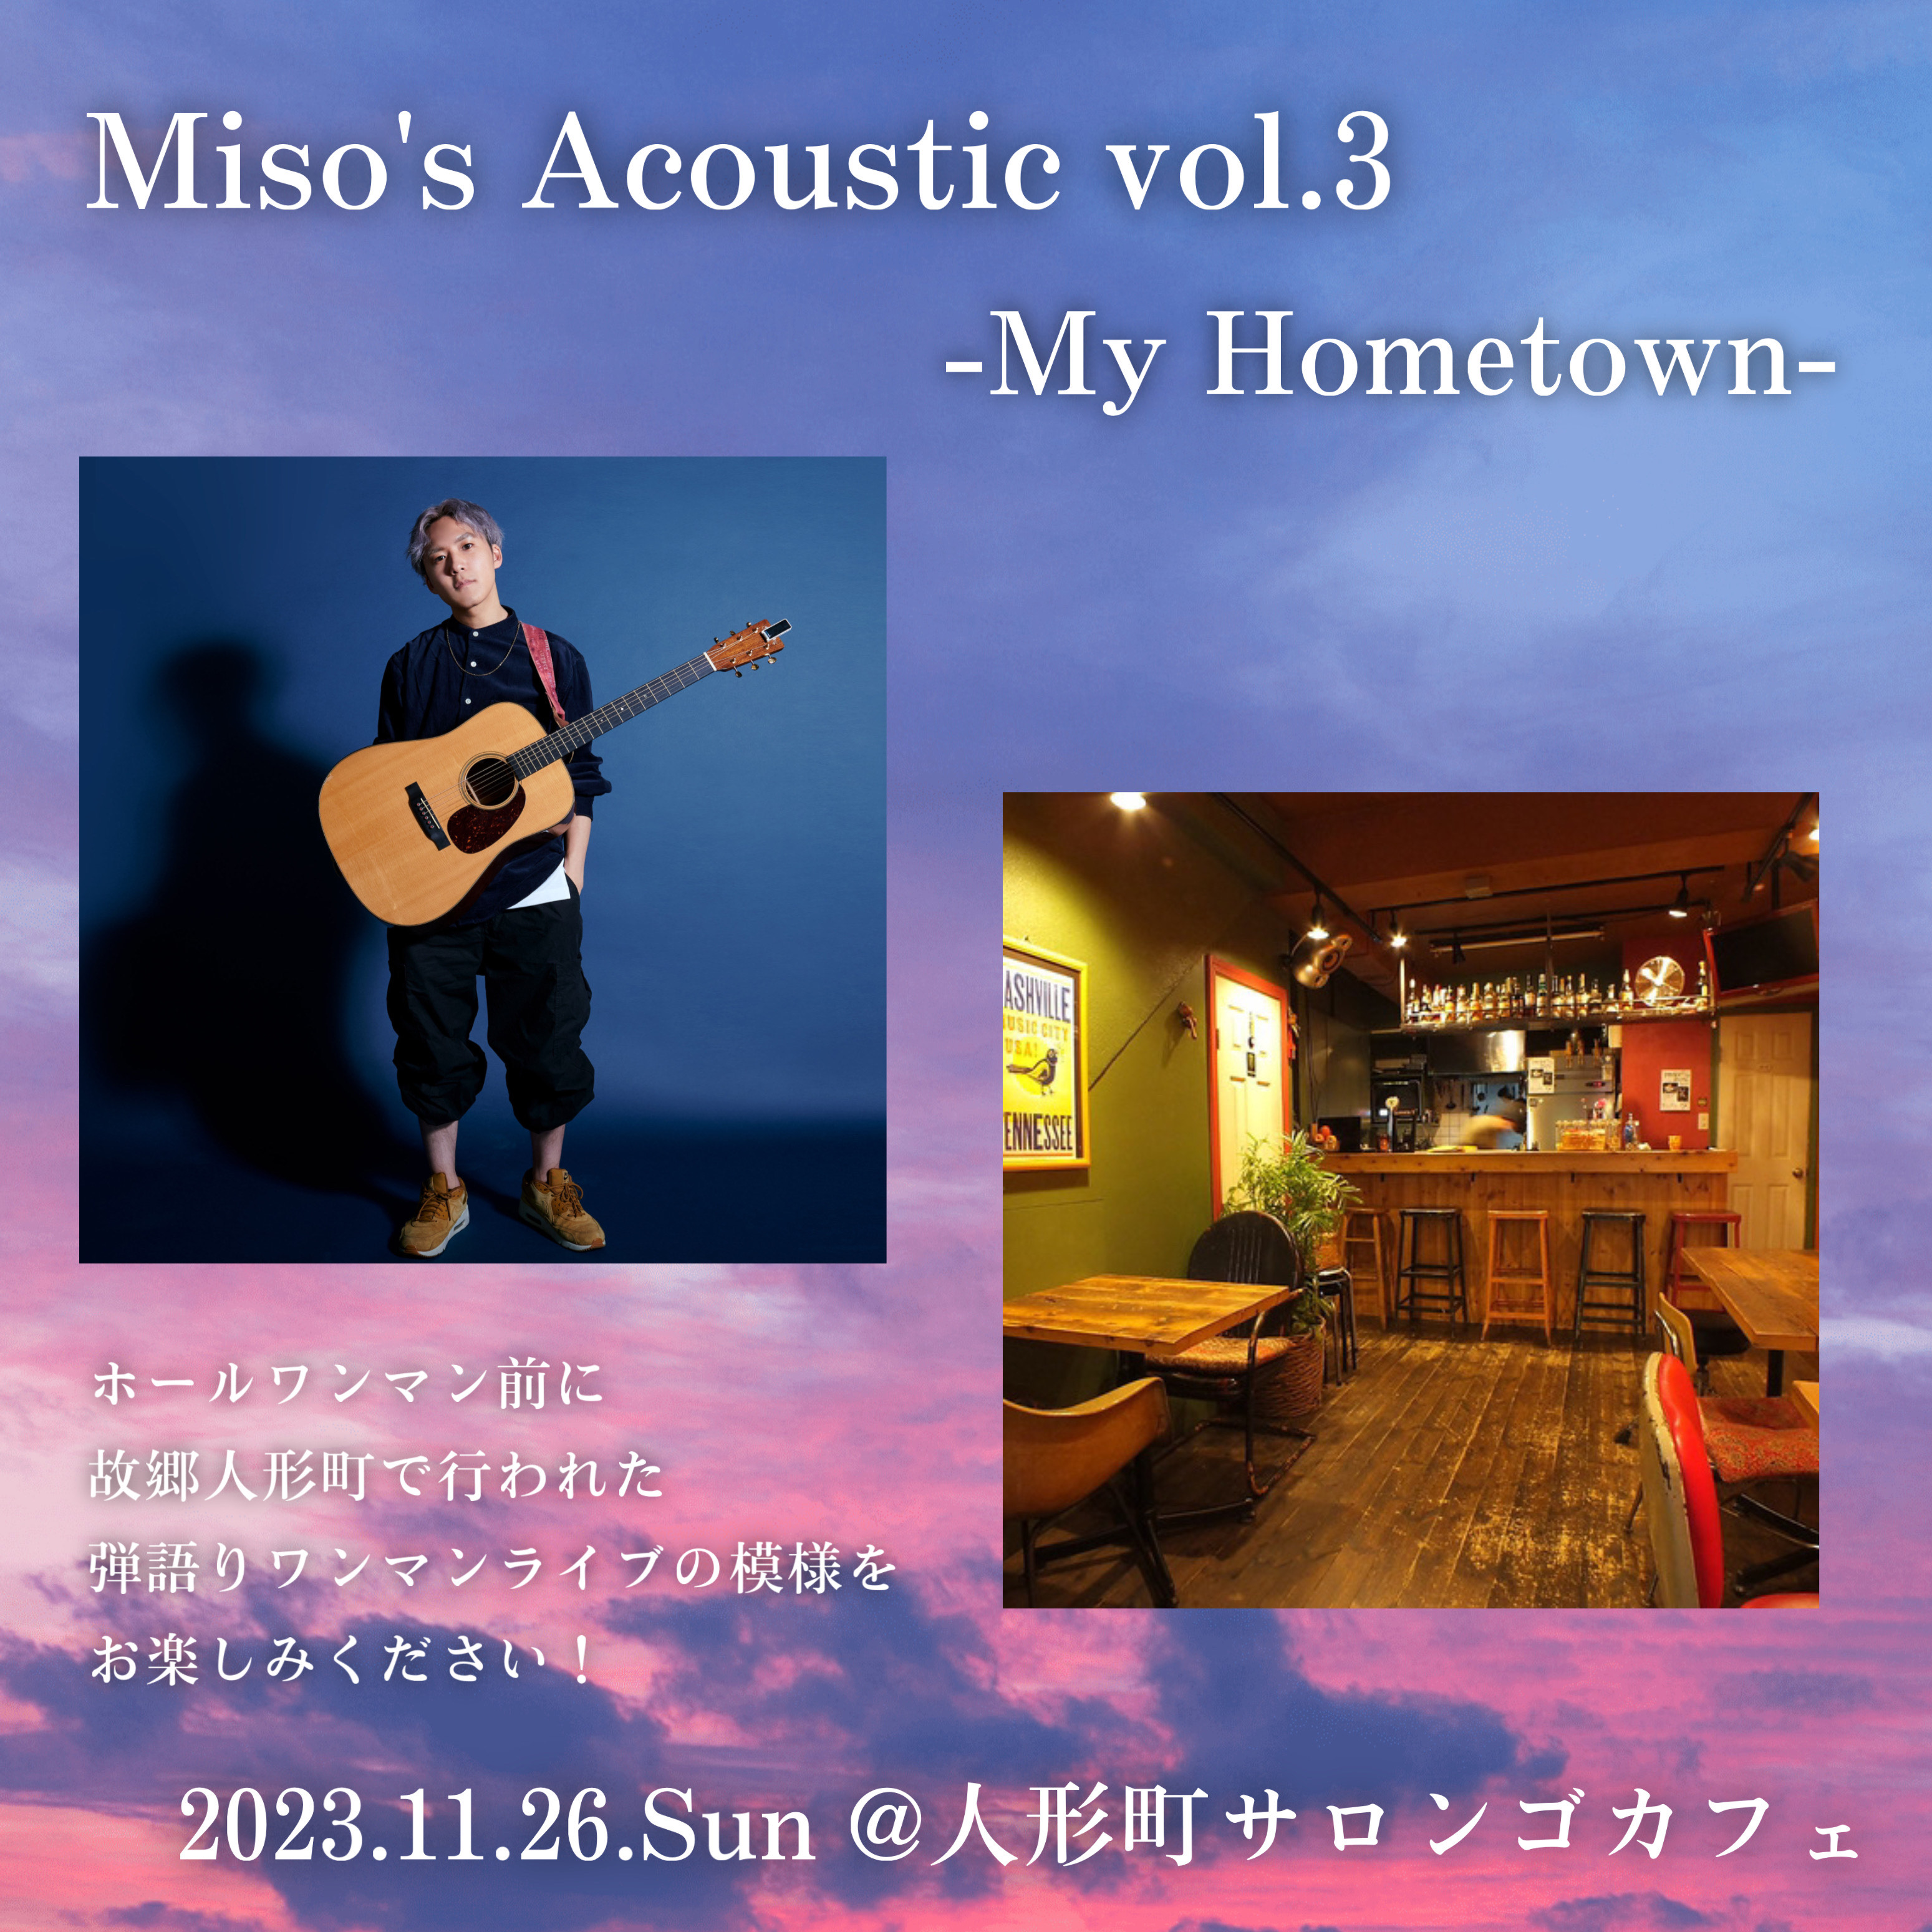 Miso’s Acoustic vol.3 -My Hometown-ジャケット写真